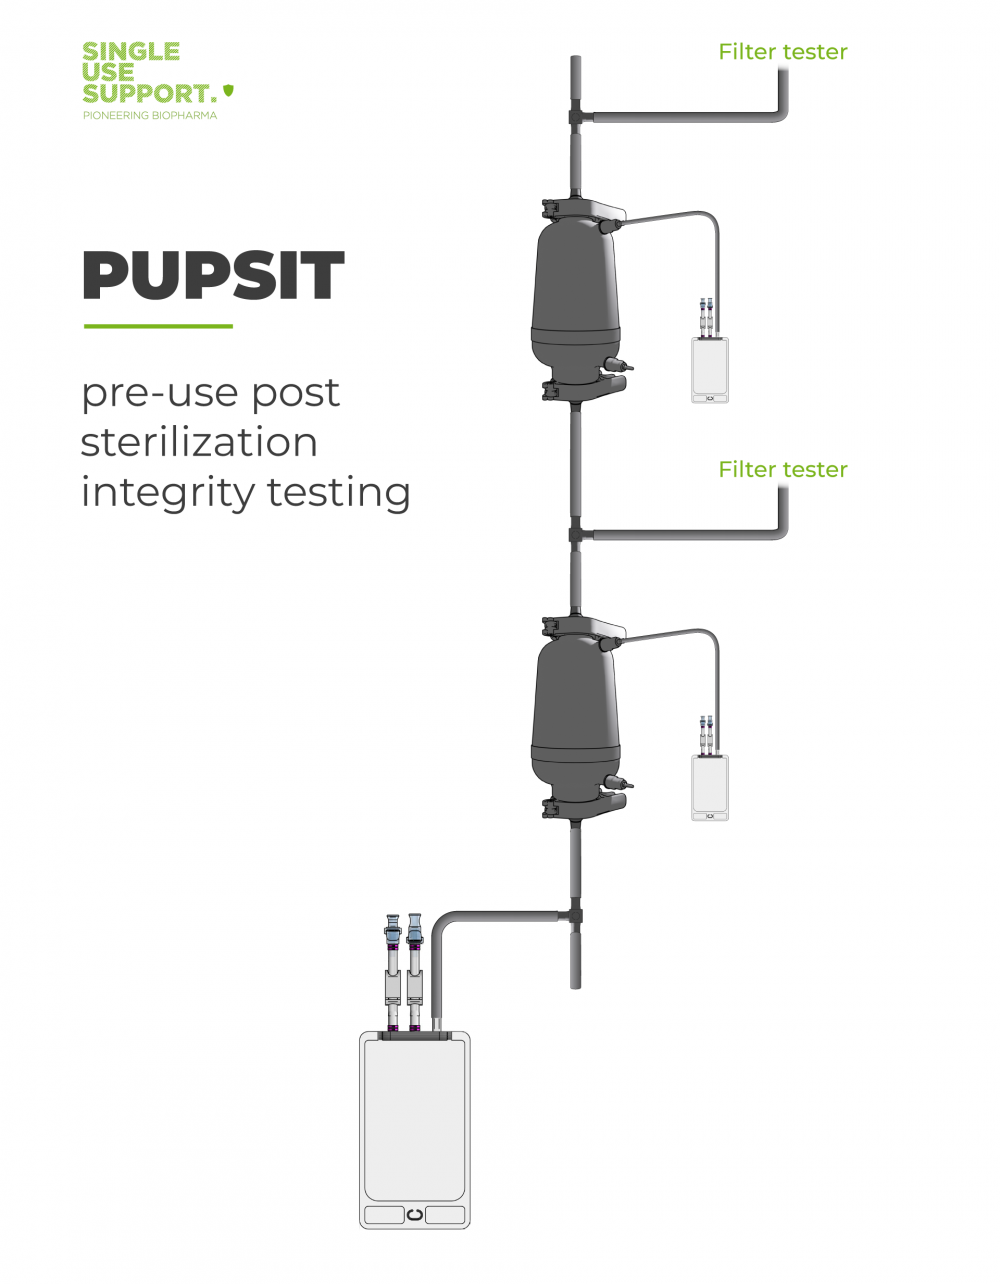 PUPSIT - pre-use post sterilization integrity testing filter explanation